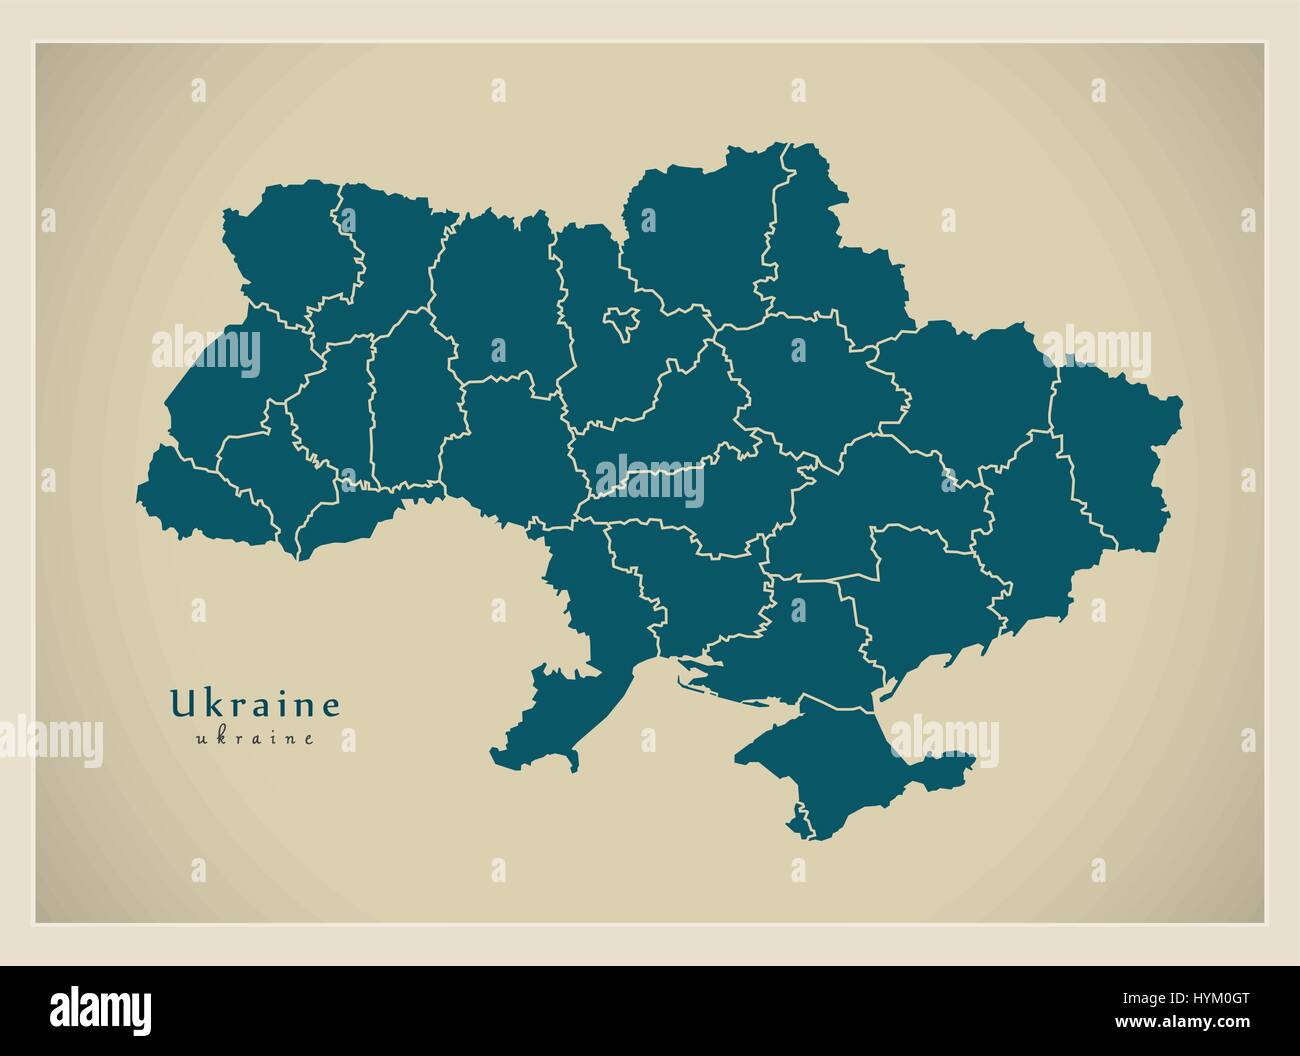 Ukraine regions. Map of Ukraine with Regions. Титан на карте Украины. Ukraine Regions Map White. Счастье Украина на карте.